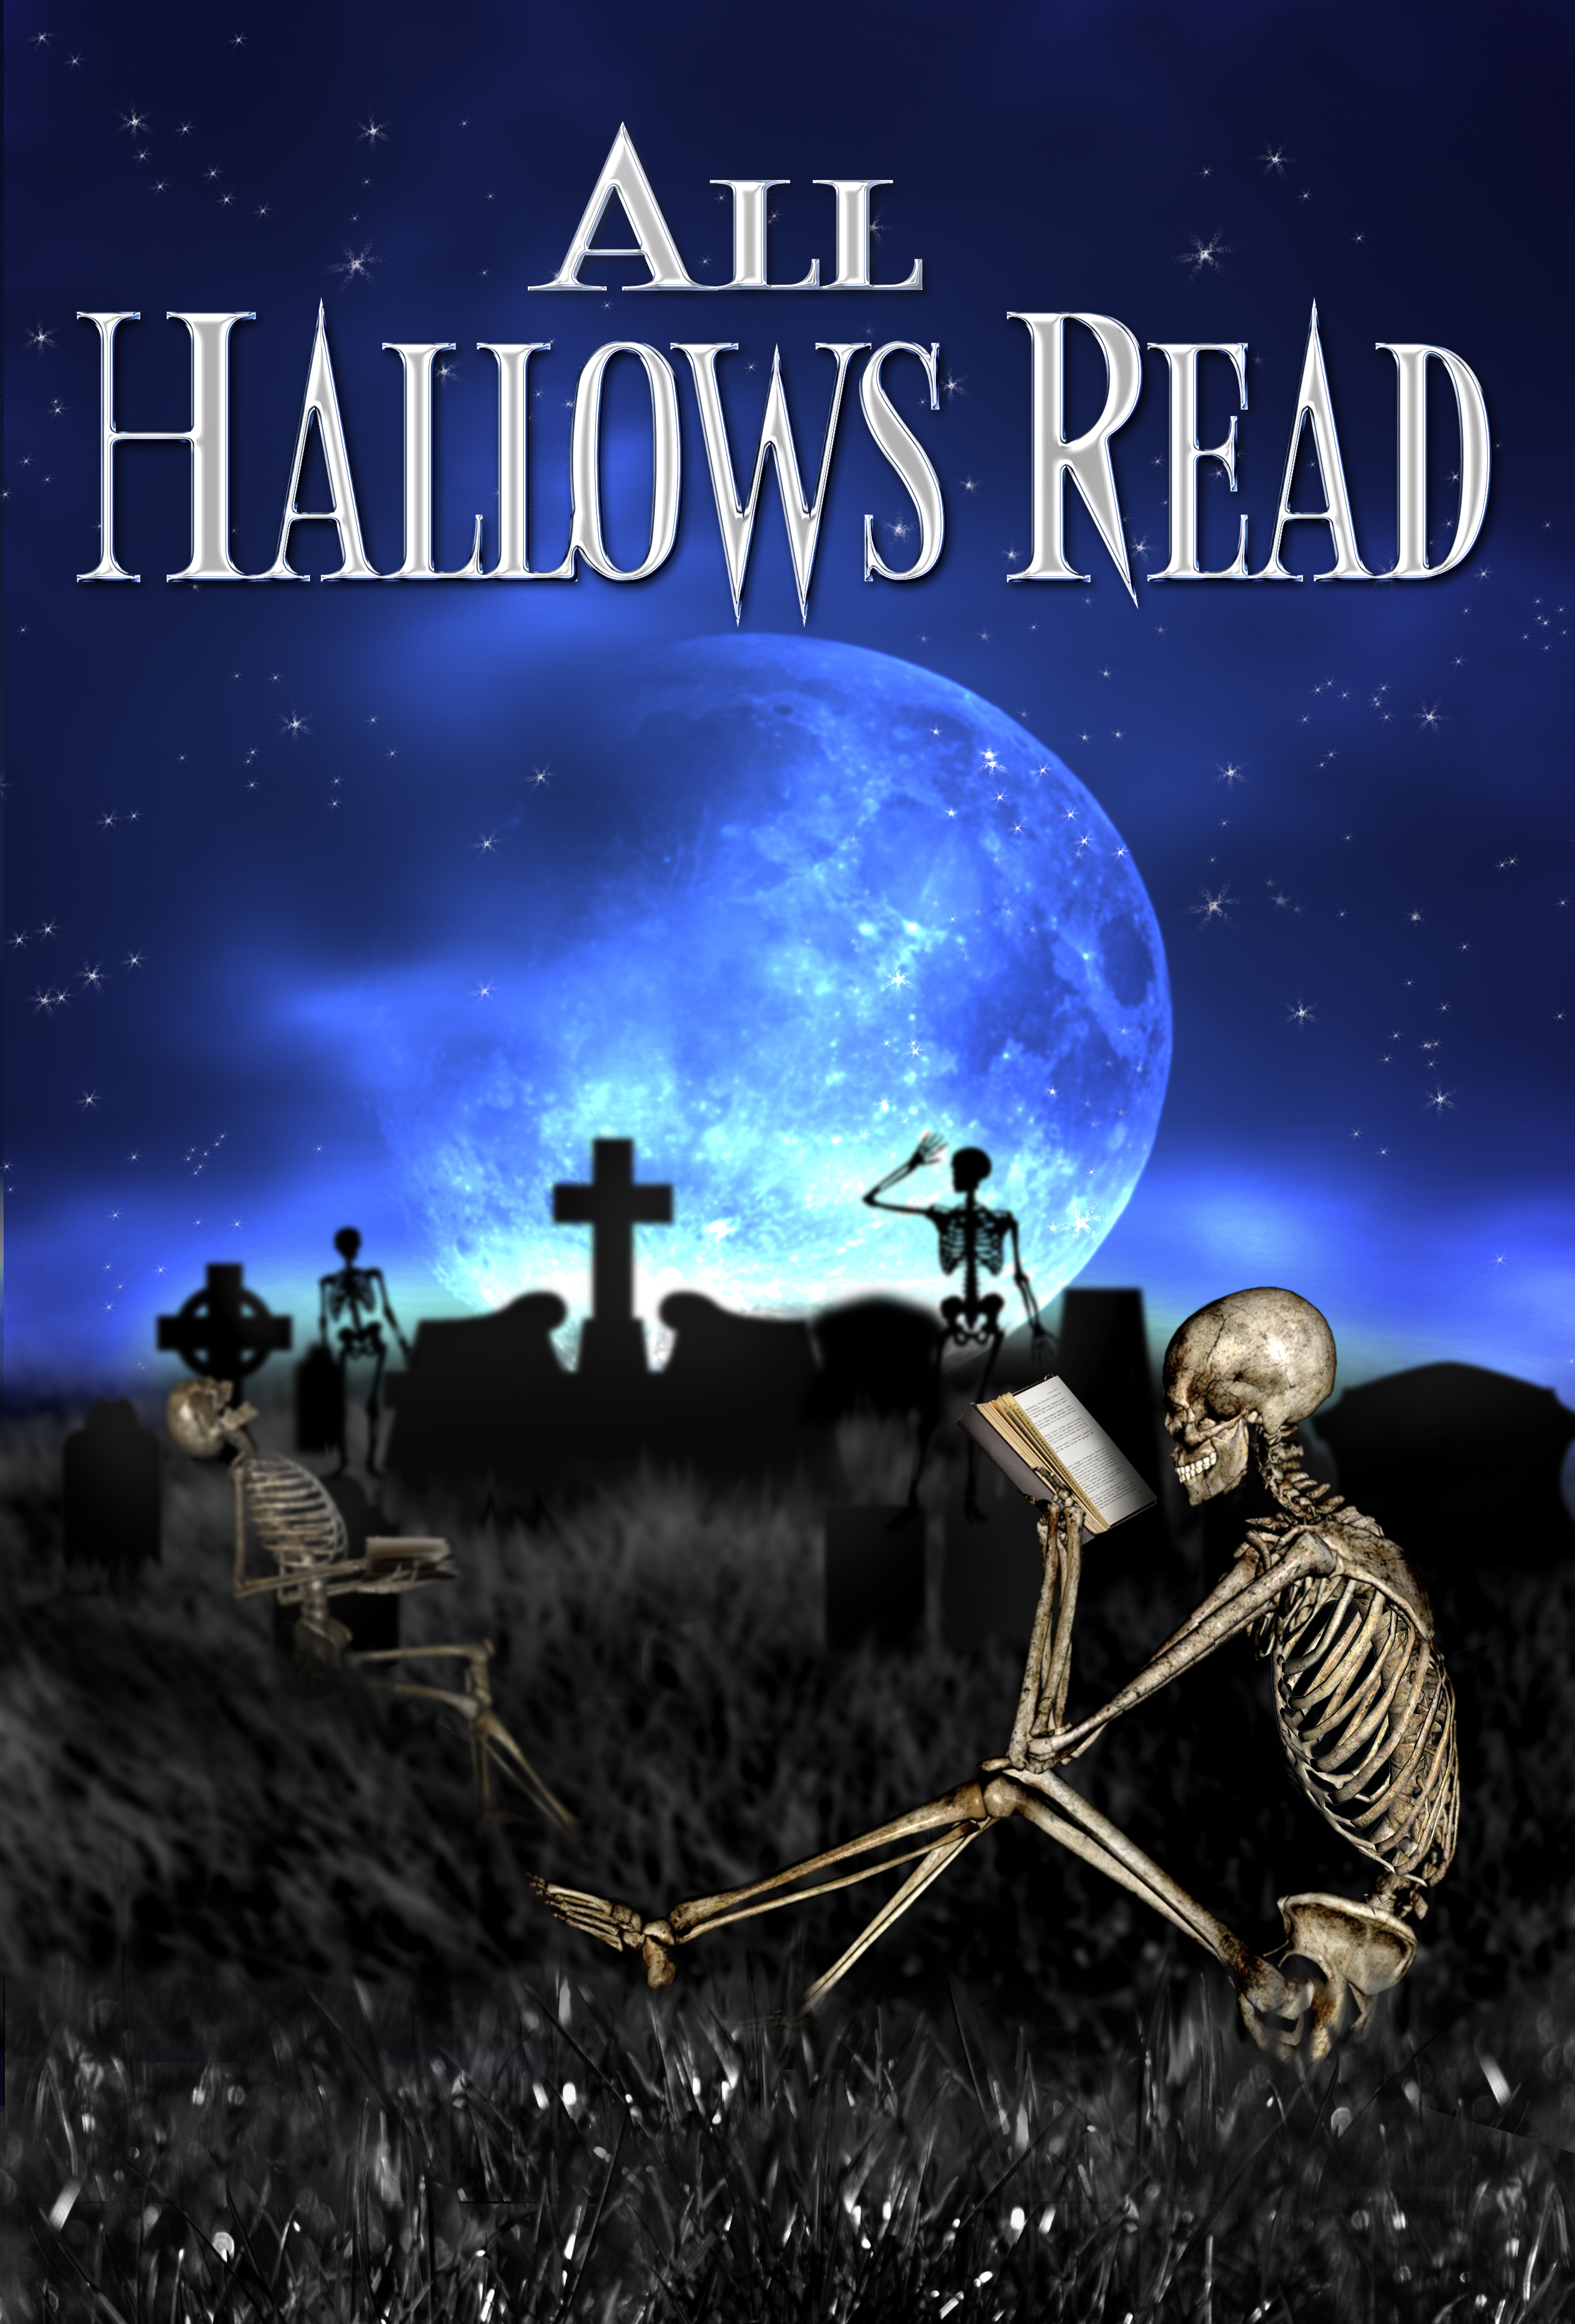 graveyard_all_hallows_read_by_blablover5-d7xwj4b